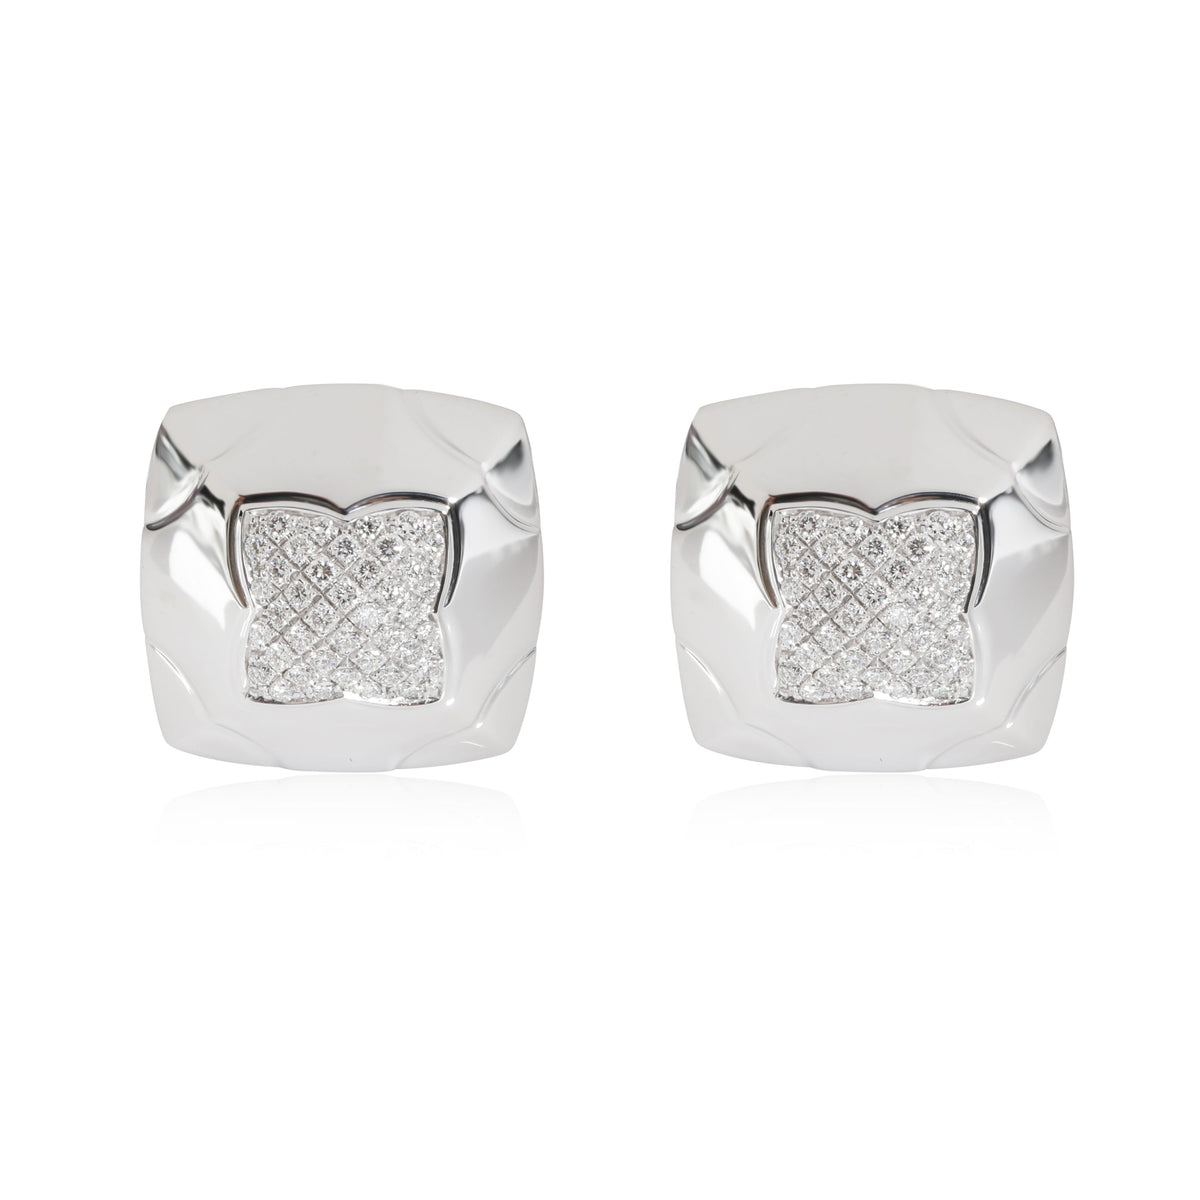 BVLGARI Pyramide Diamond Earrings in 18K White Gold 1.52 CTW